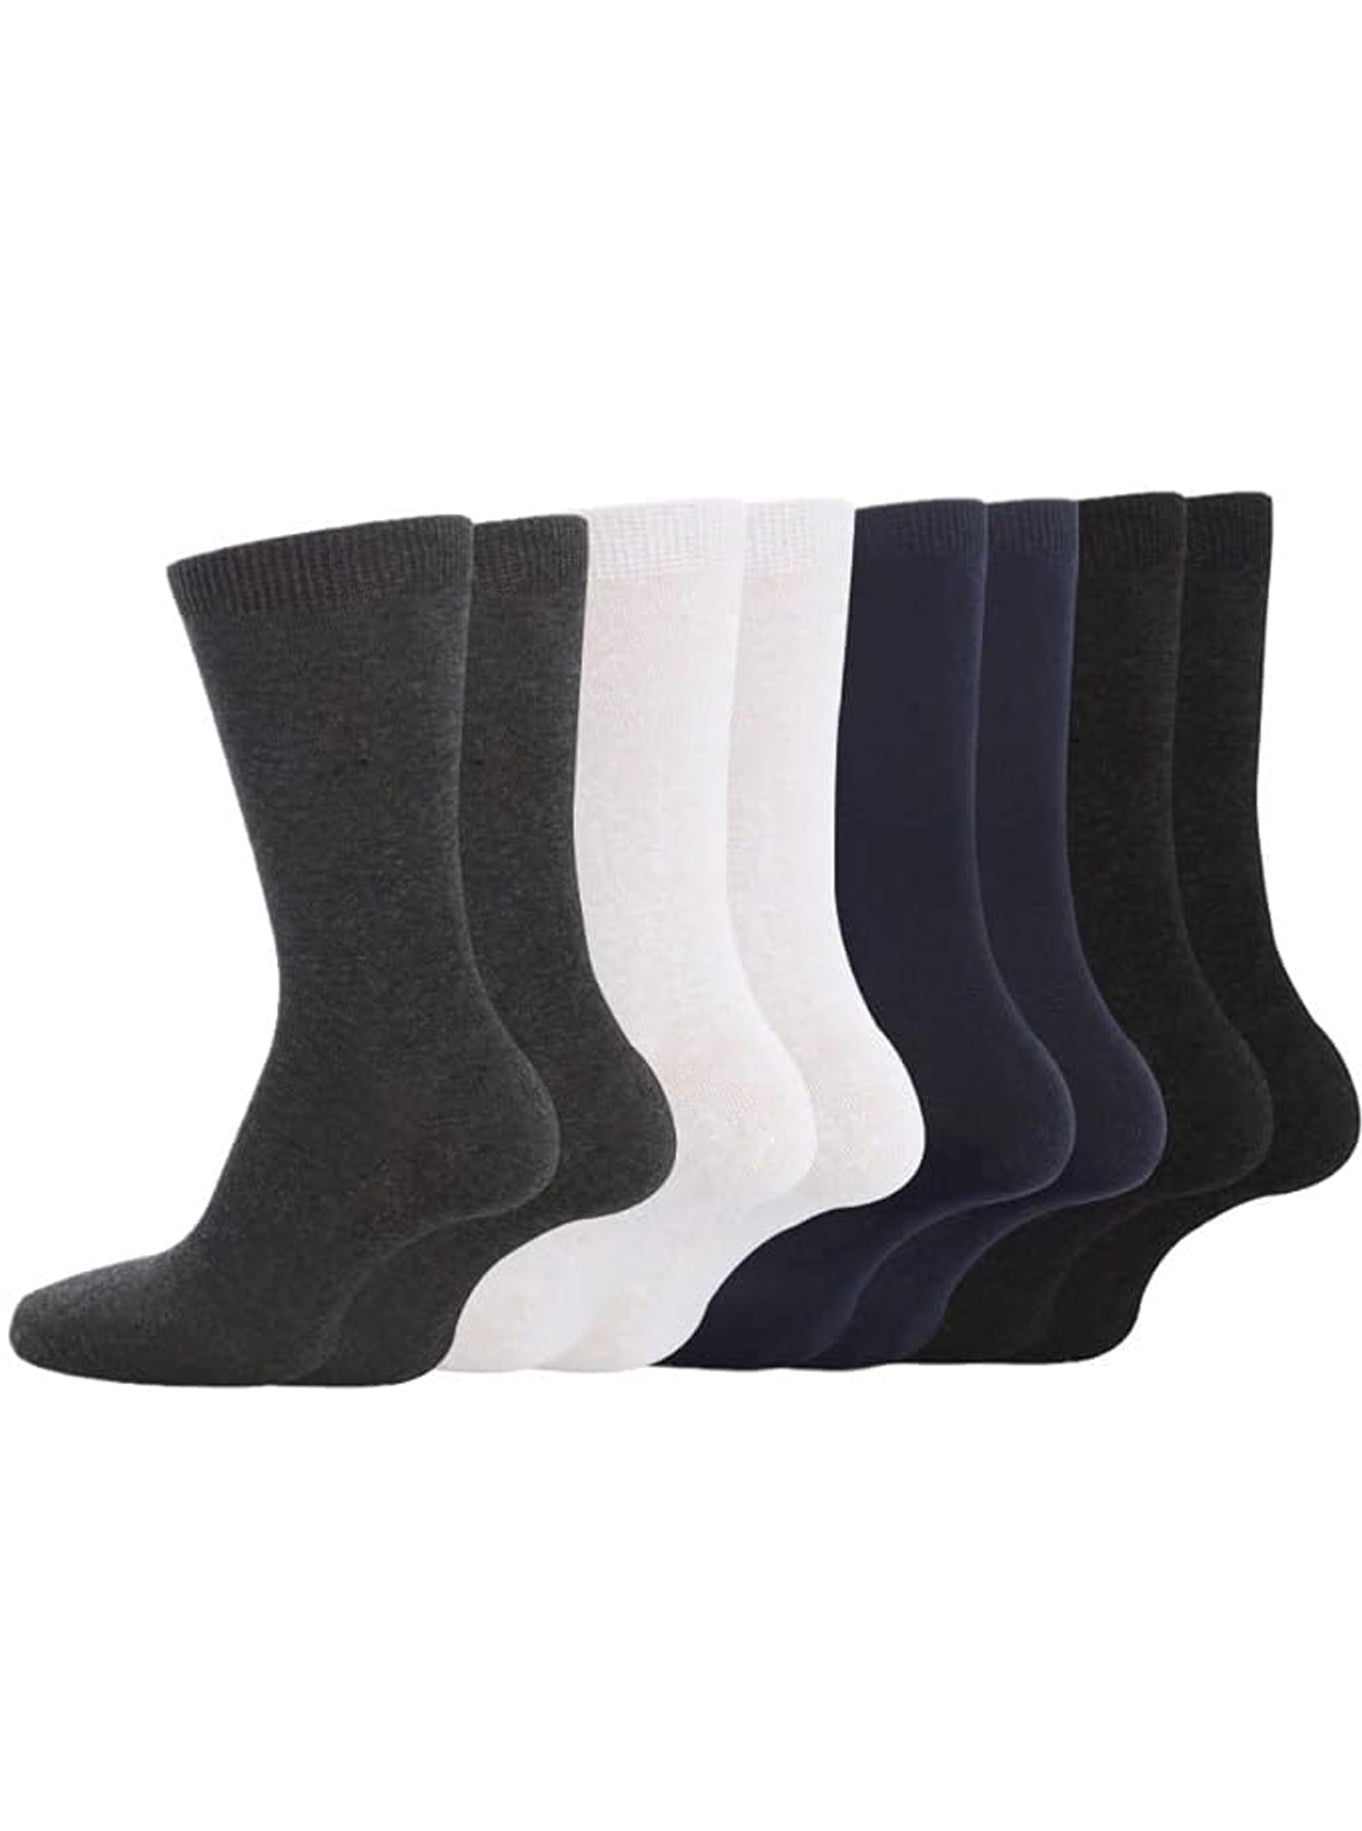 Bahob® 6 Pairs Unisex Back to School Cotton Rich Plain Ankle School Socks. - Bahob